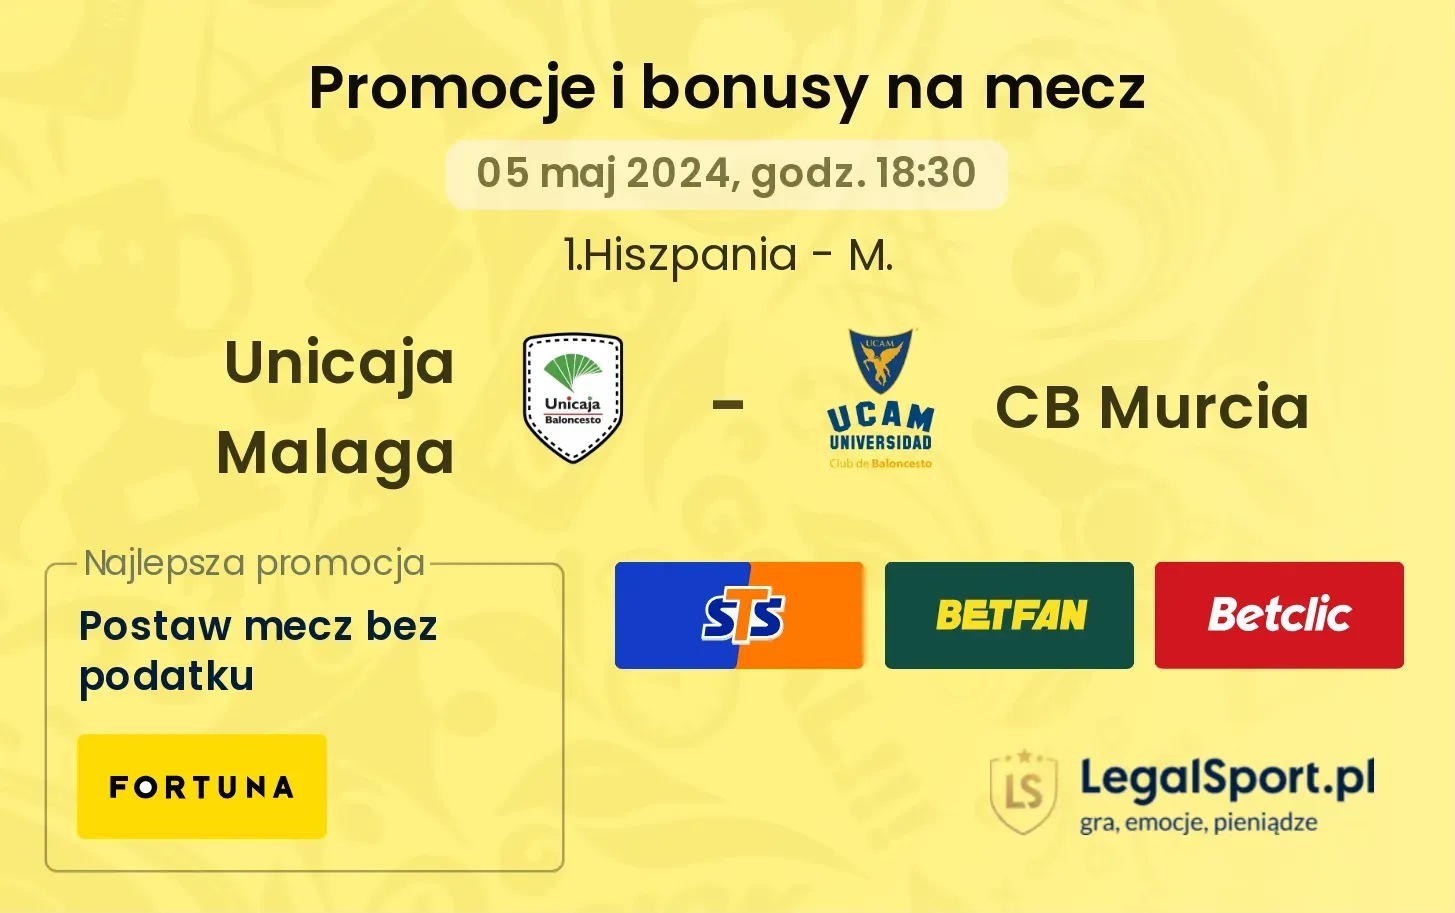 Unicaja Malaga - CB Murcia promocje bonusy na mecz